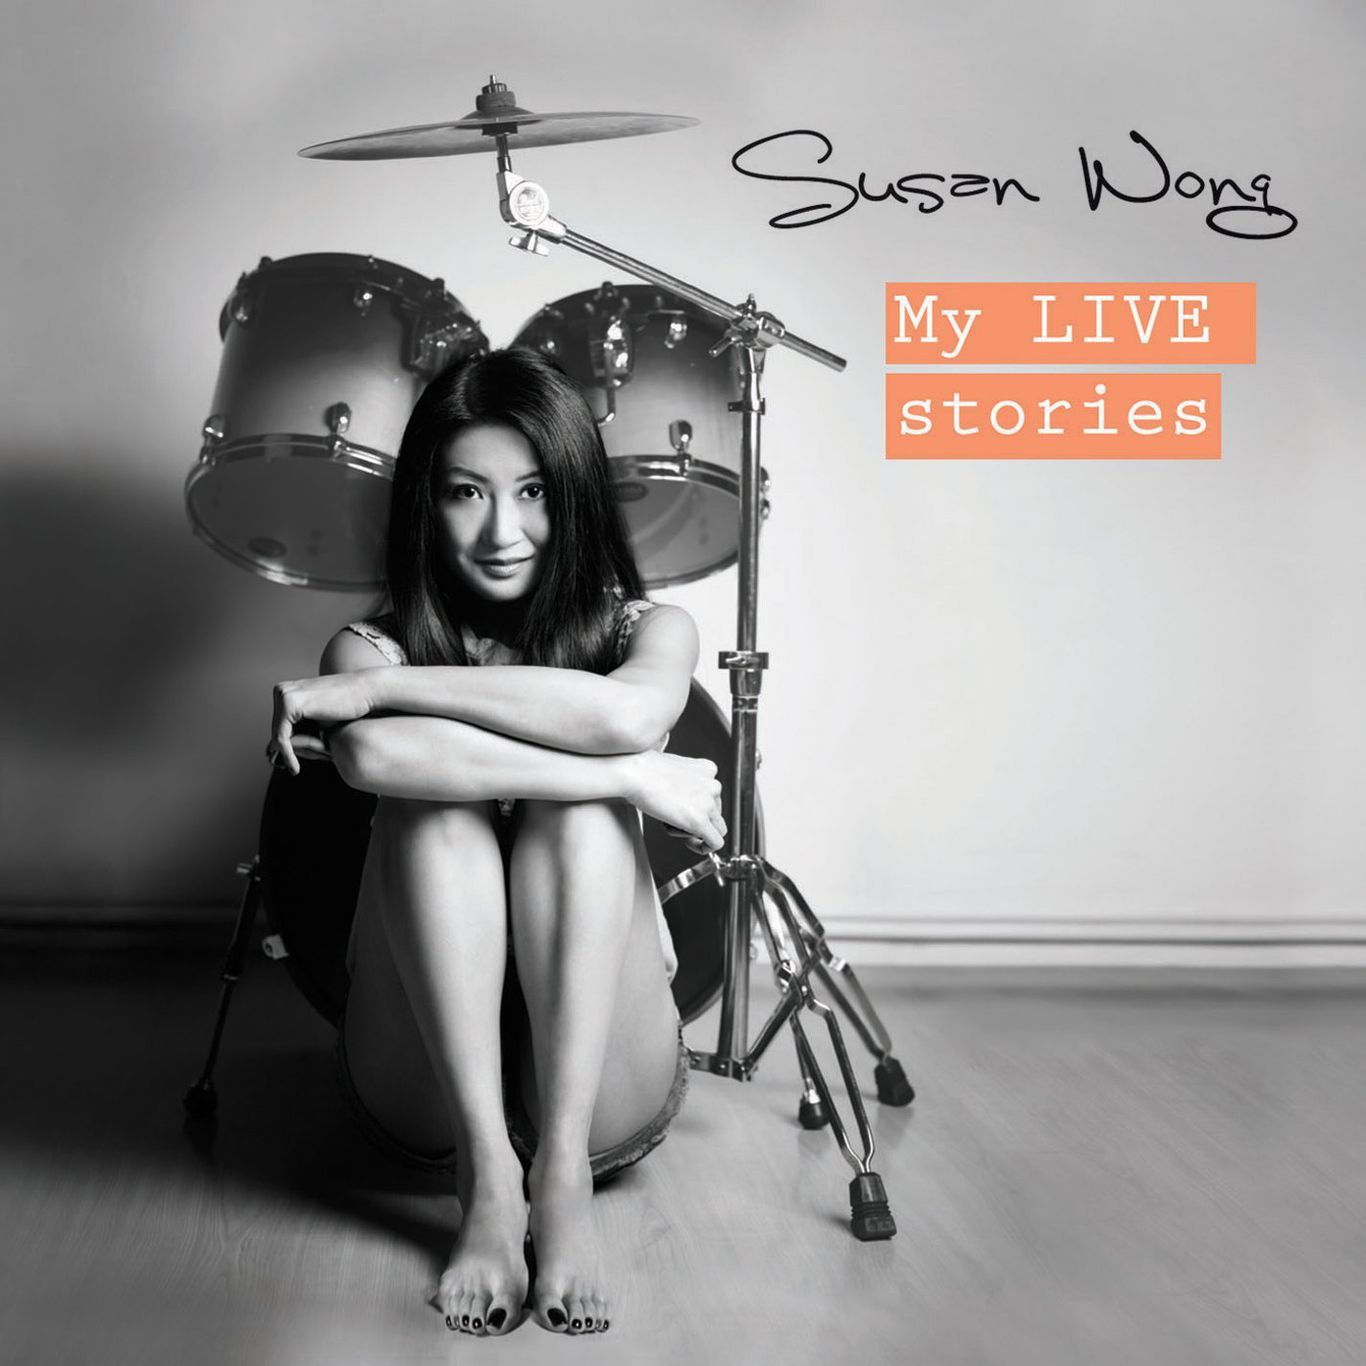 Susan Wong: My Live Stories (2013)